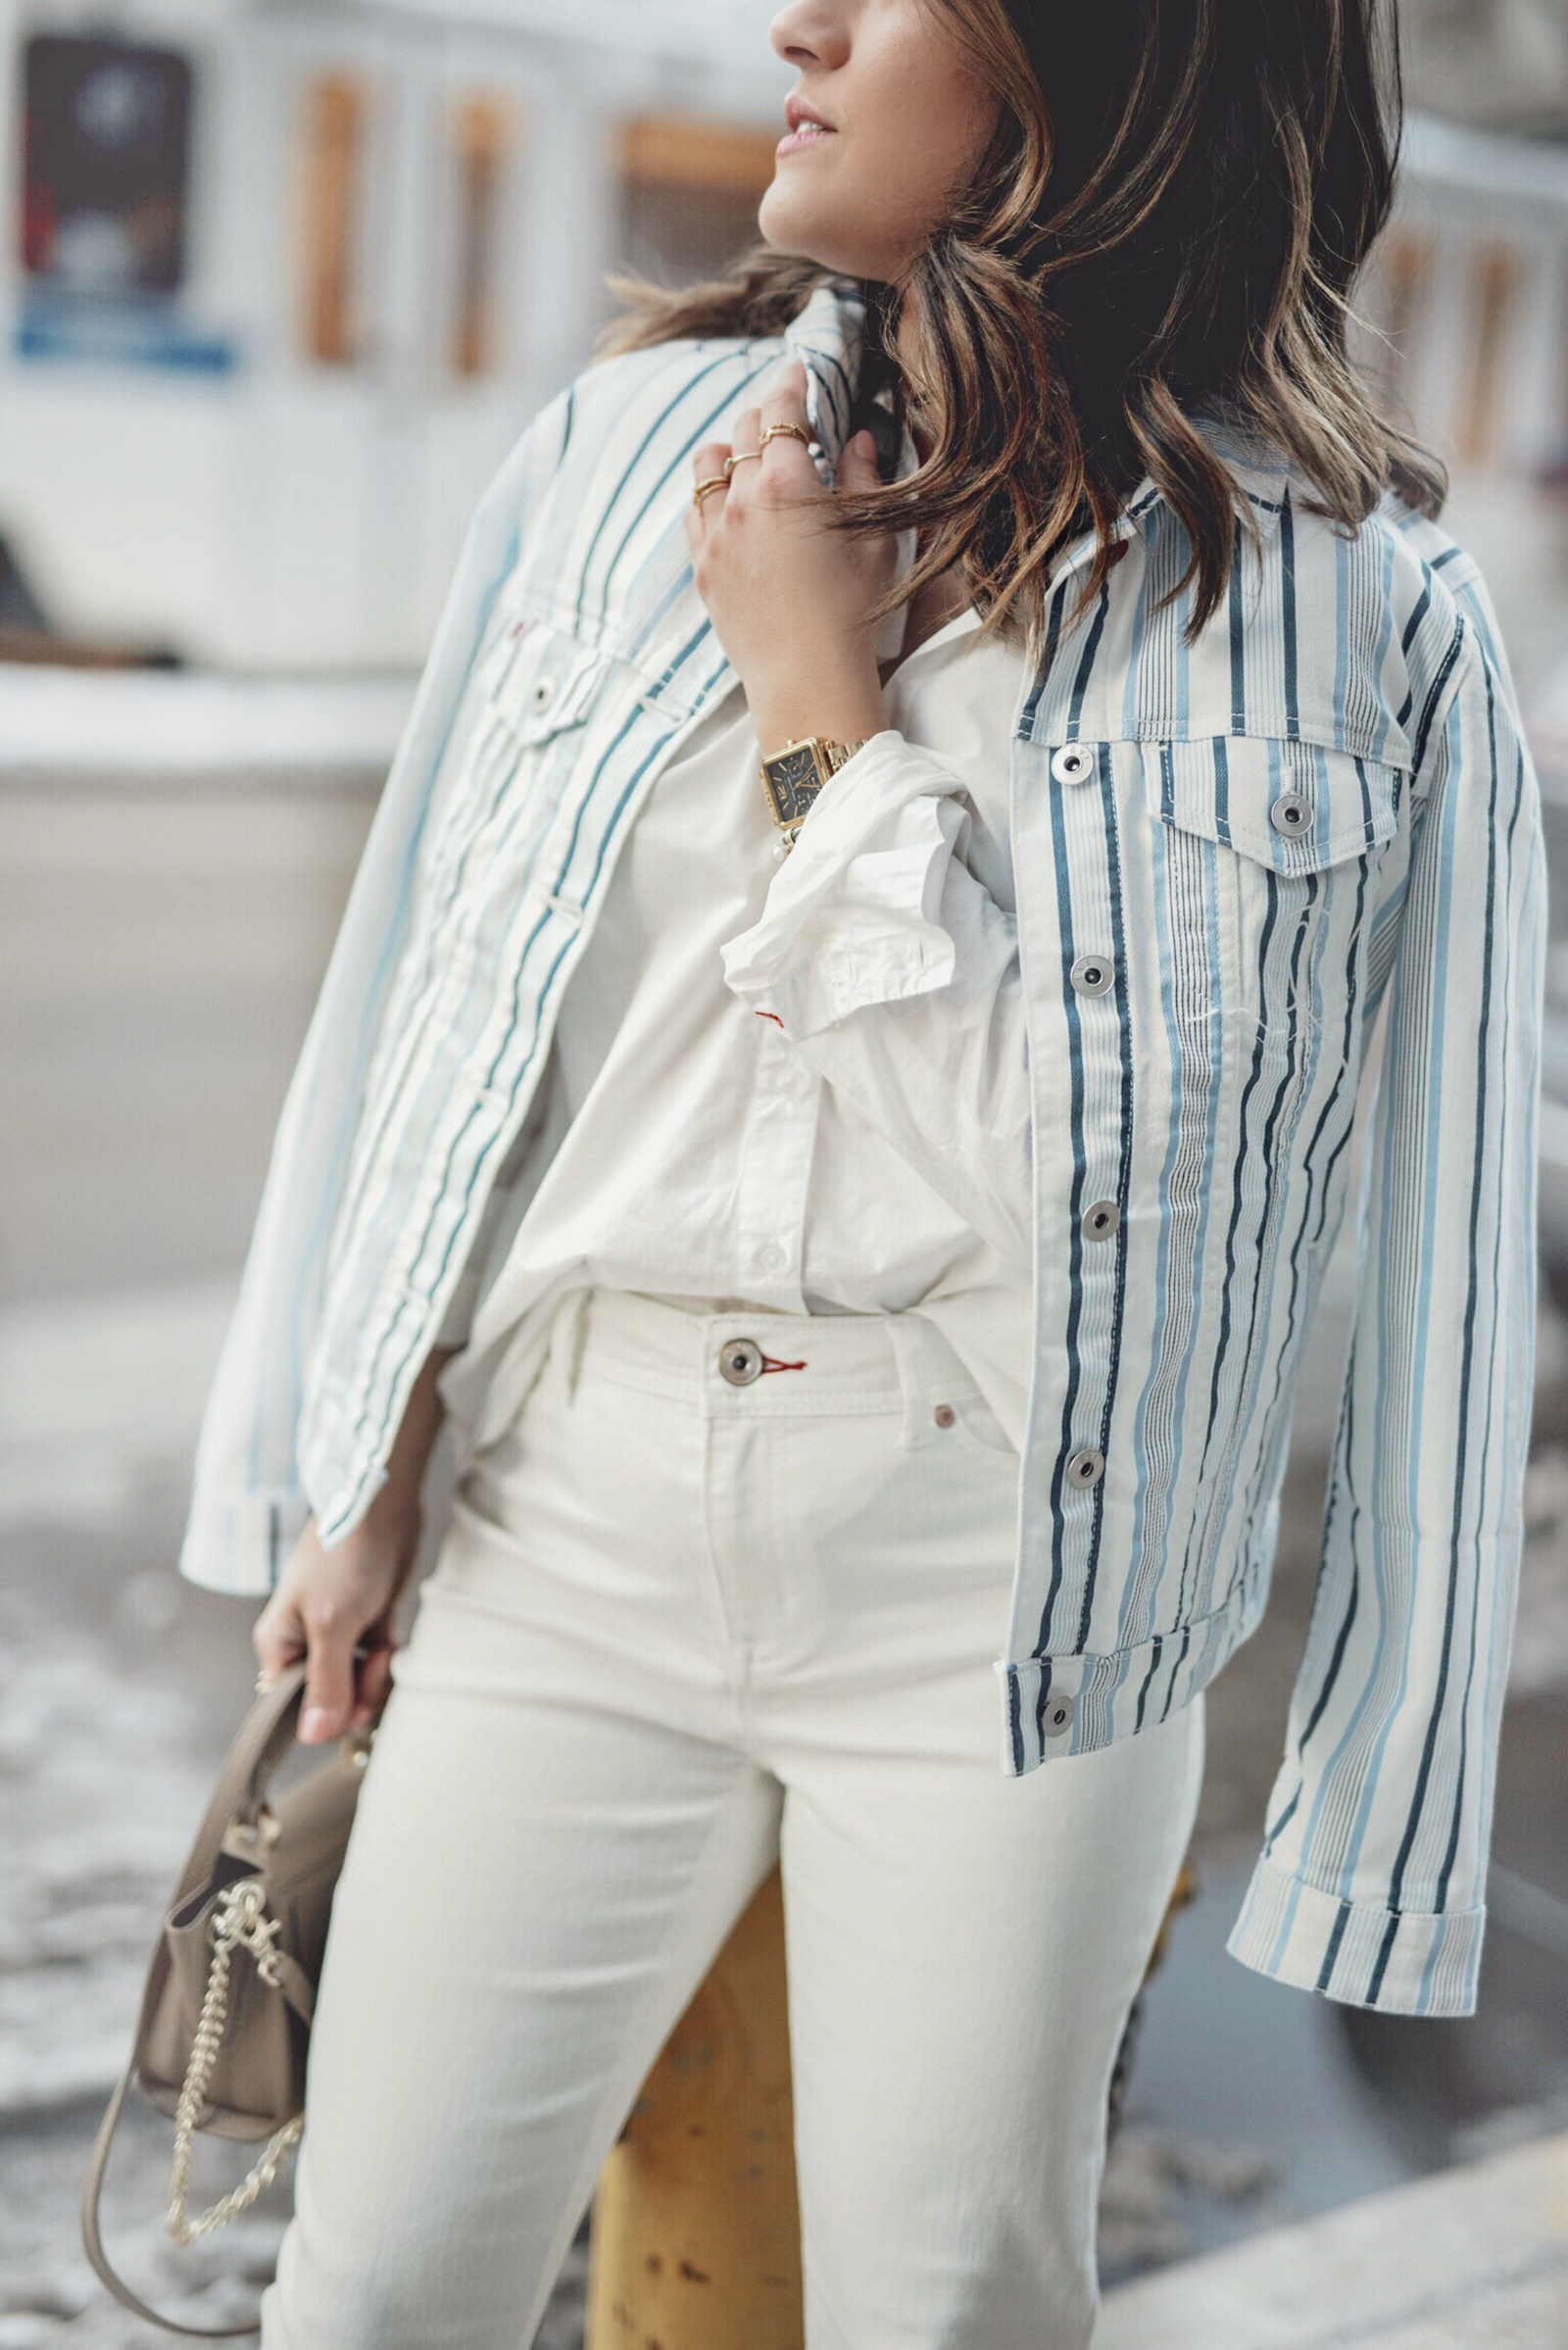 Carolina Hellal of Chic Talk wearing a white button down, white jeans and striped jacket via EV1 a Walmart brand.